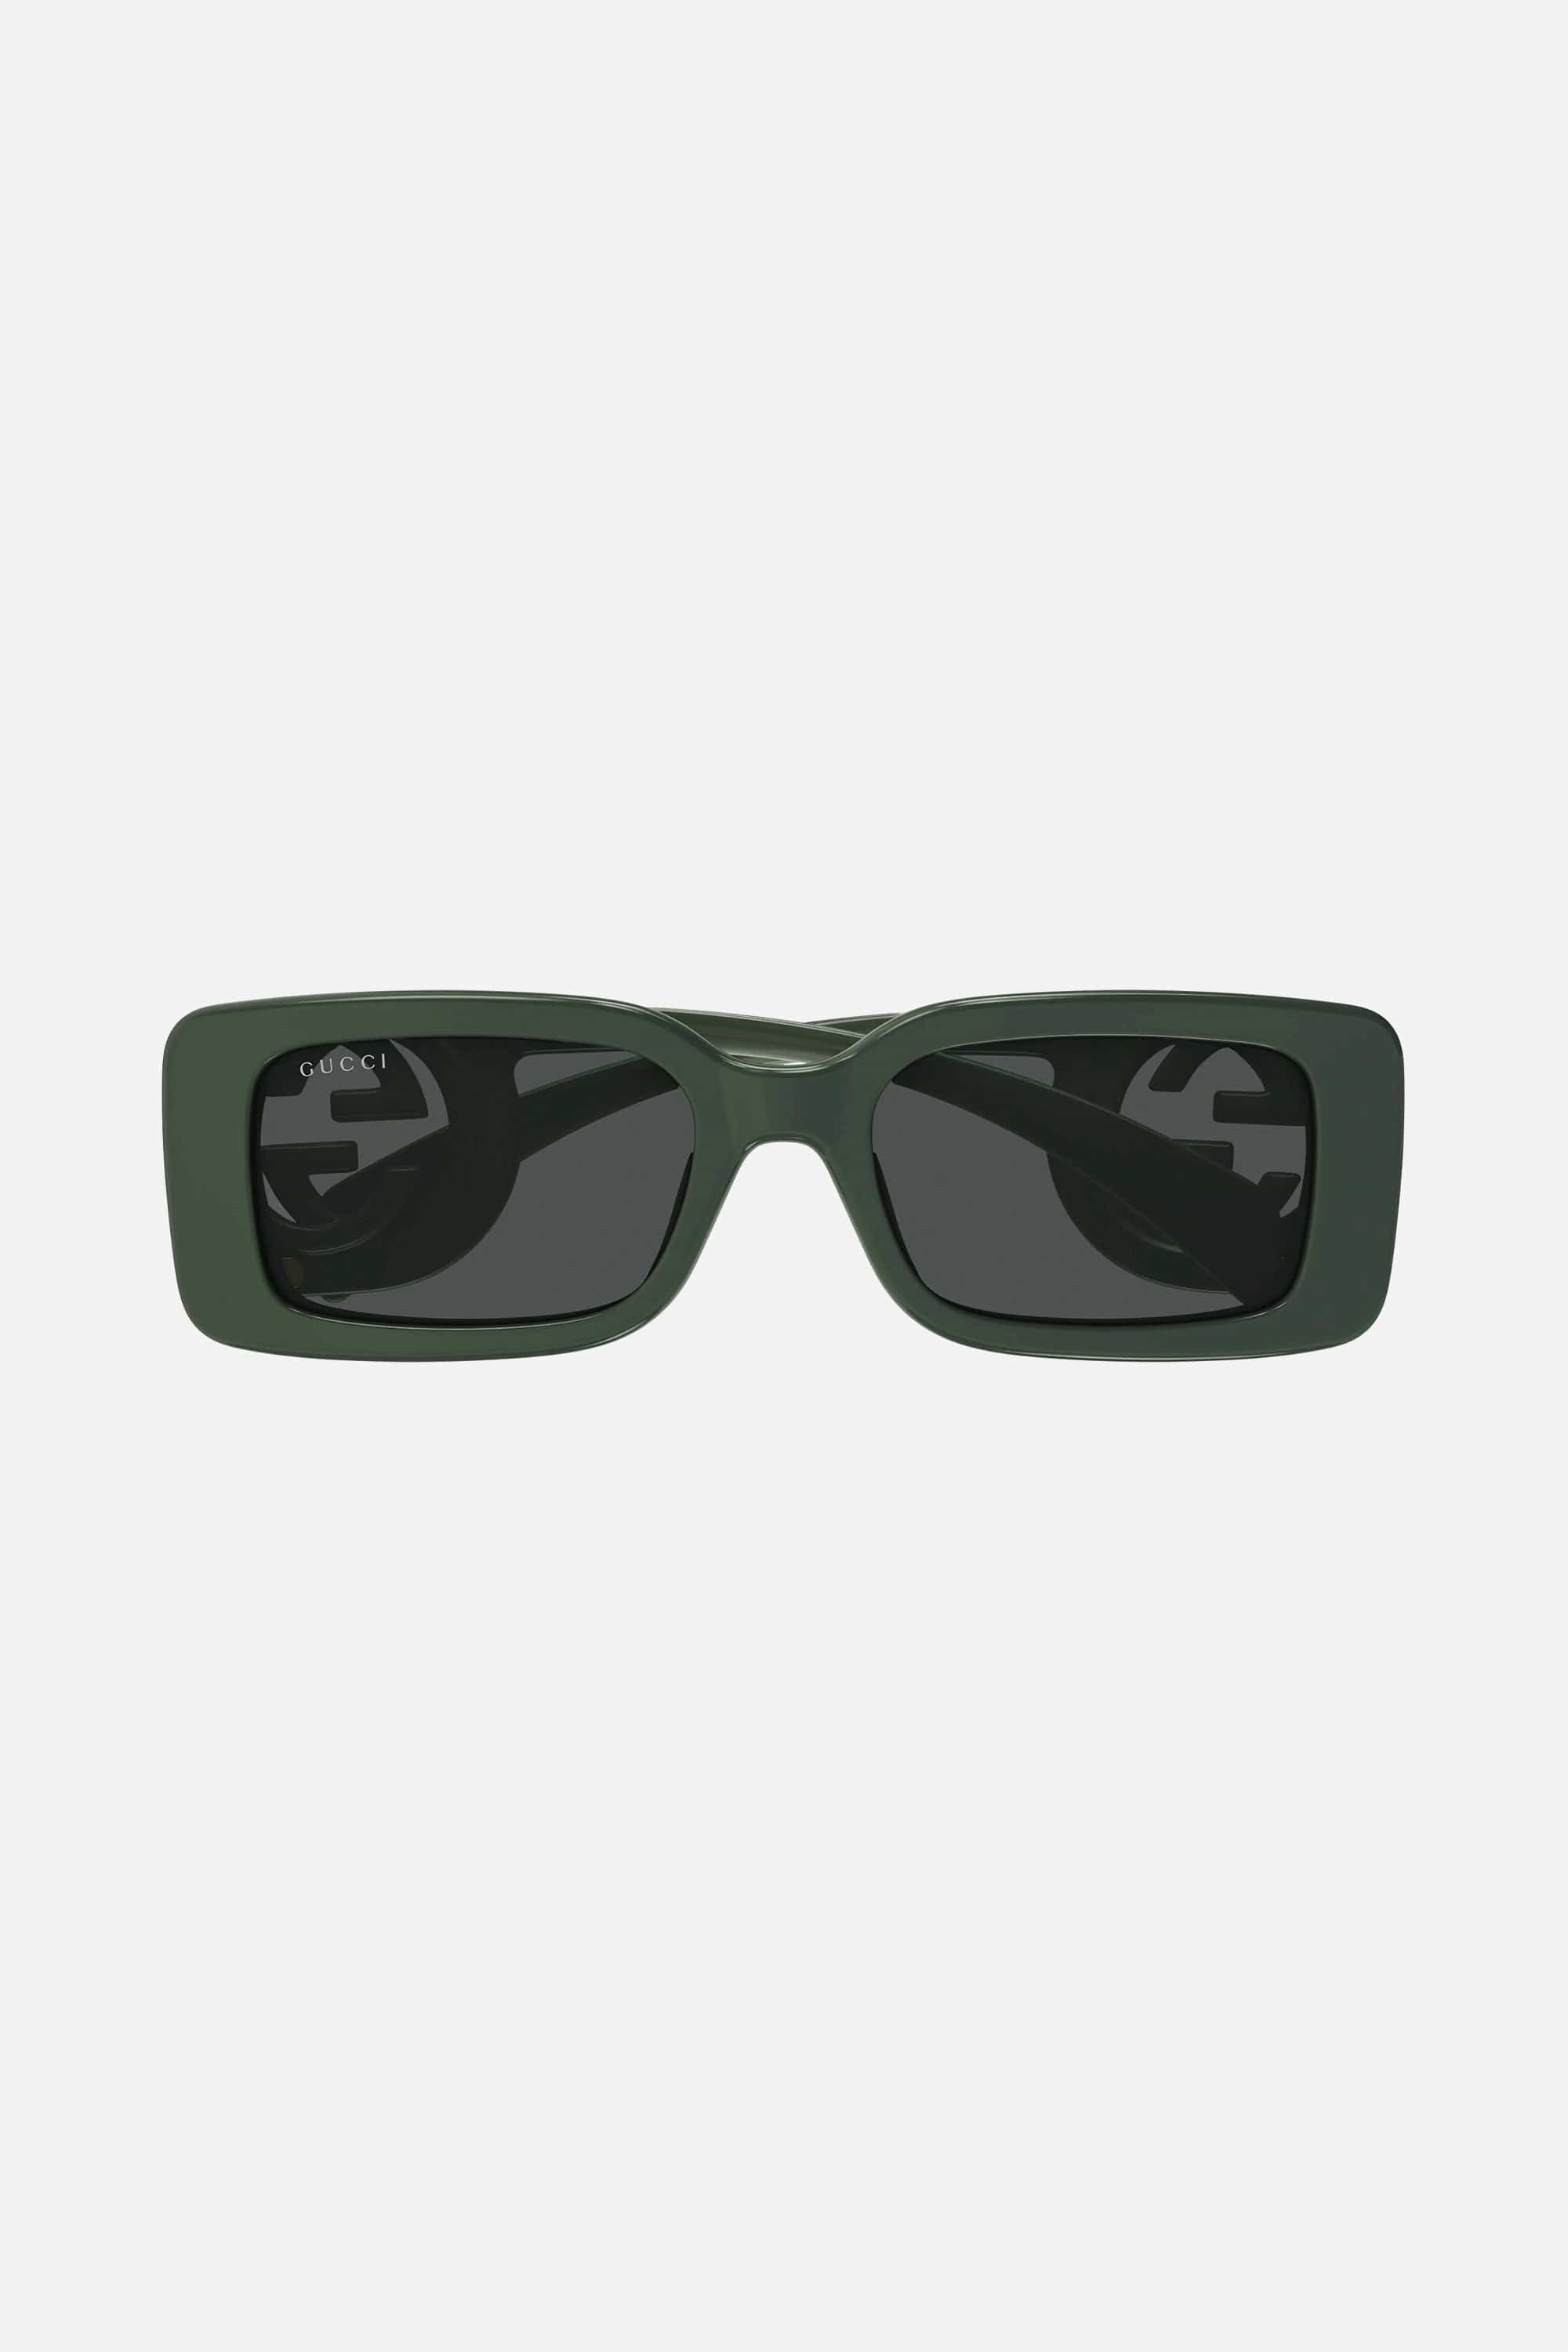 Gucci dark green bold rectangular sunglasses - Eyewear Club